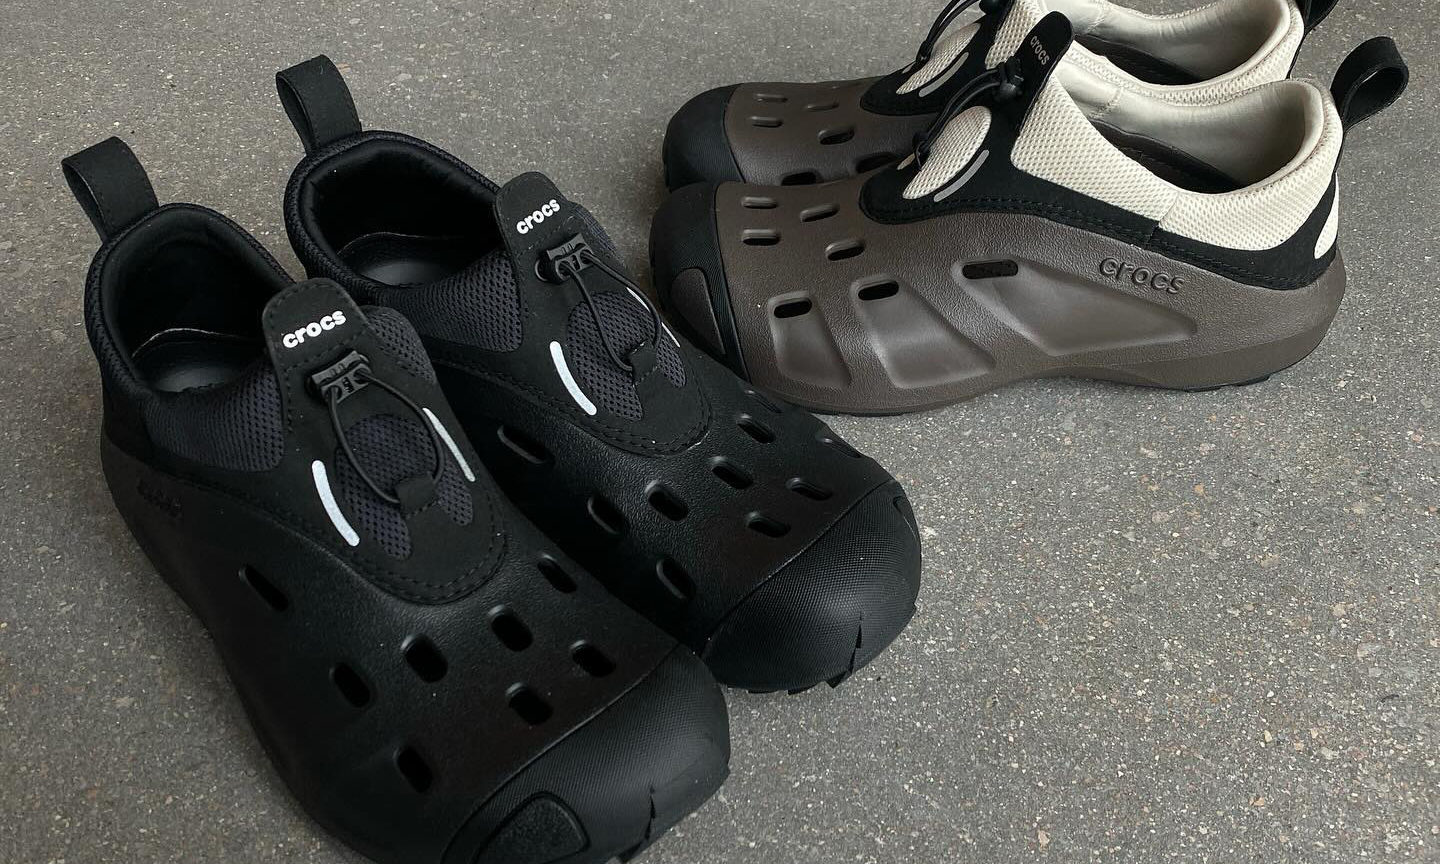 Crocs 全新 Quick Trail 鞋型即将发售